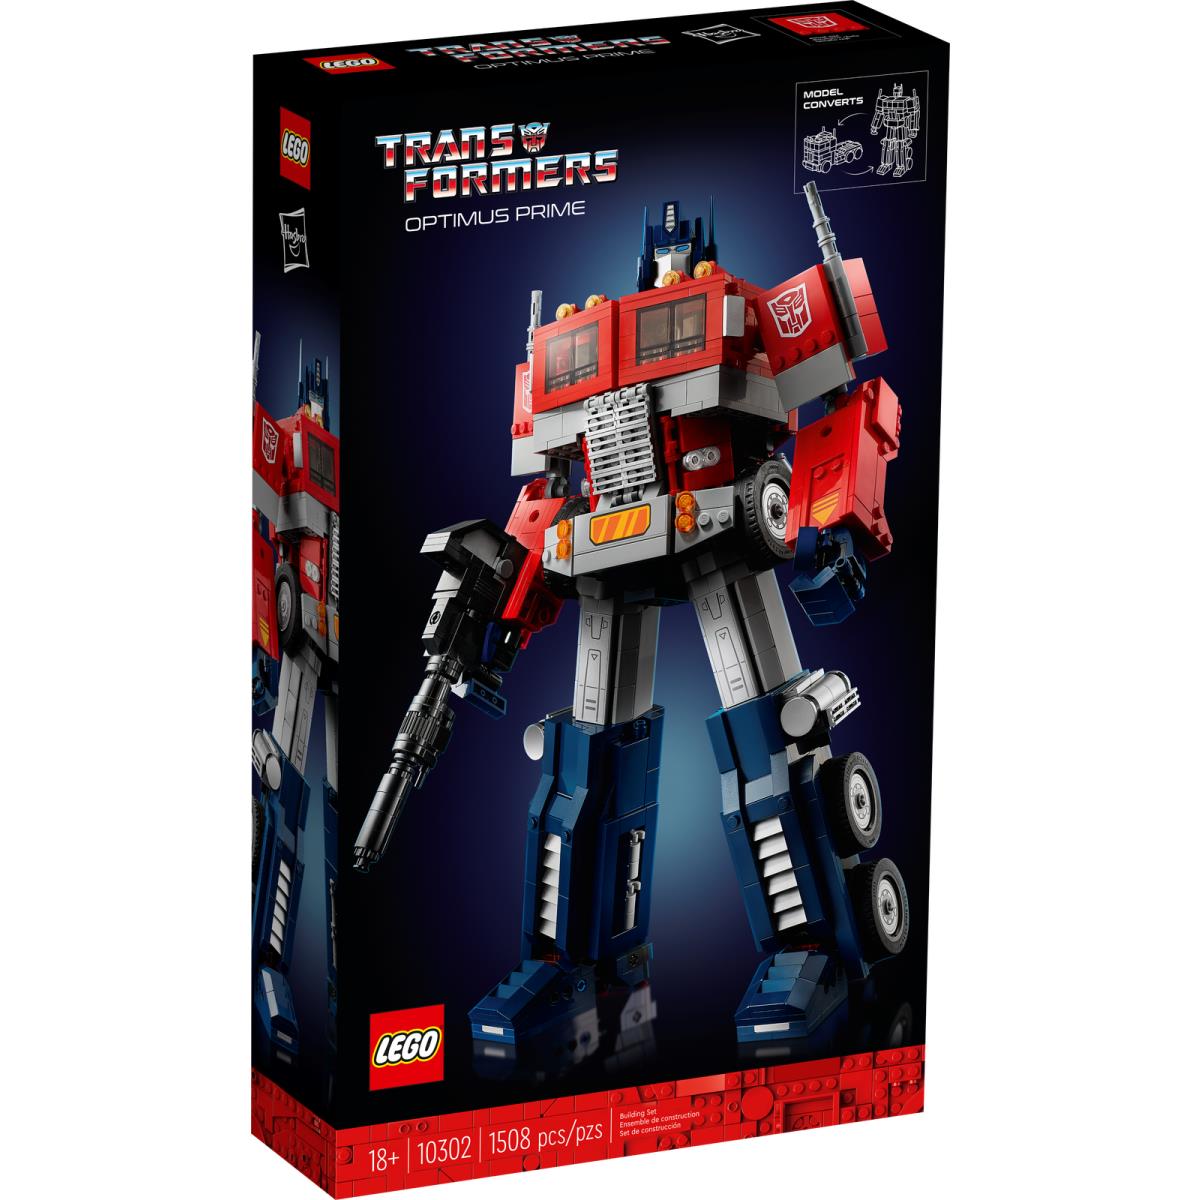 Lego 10302 Transformers: Optimus Prime Perfect Box Guarantee